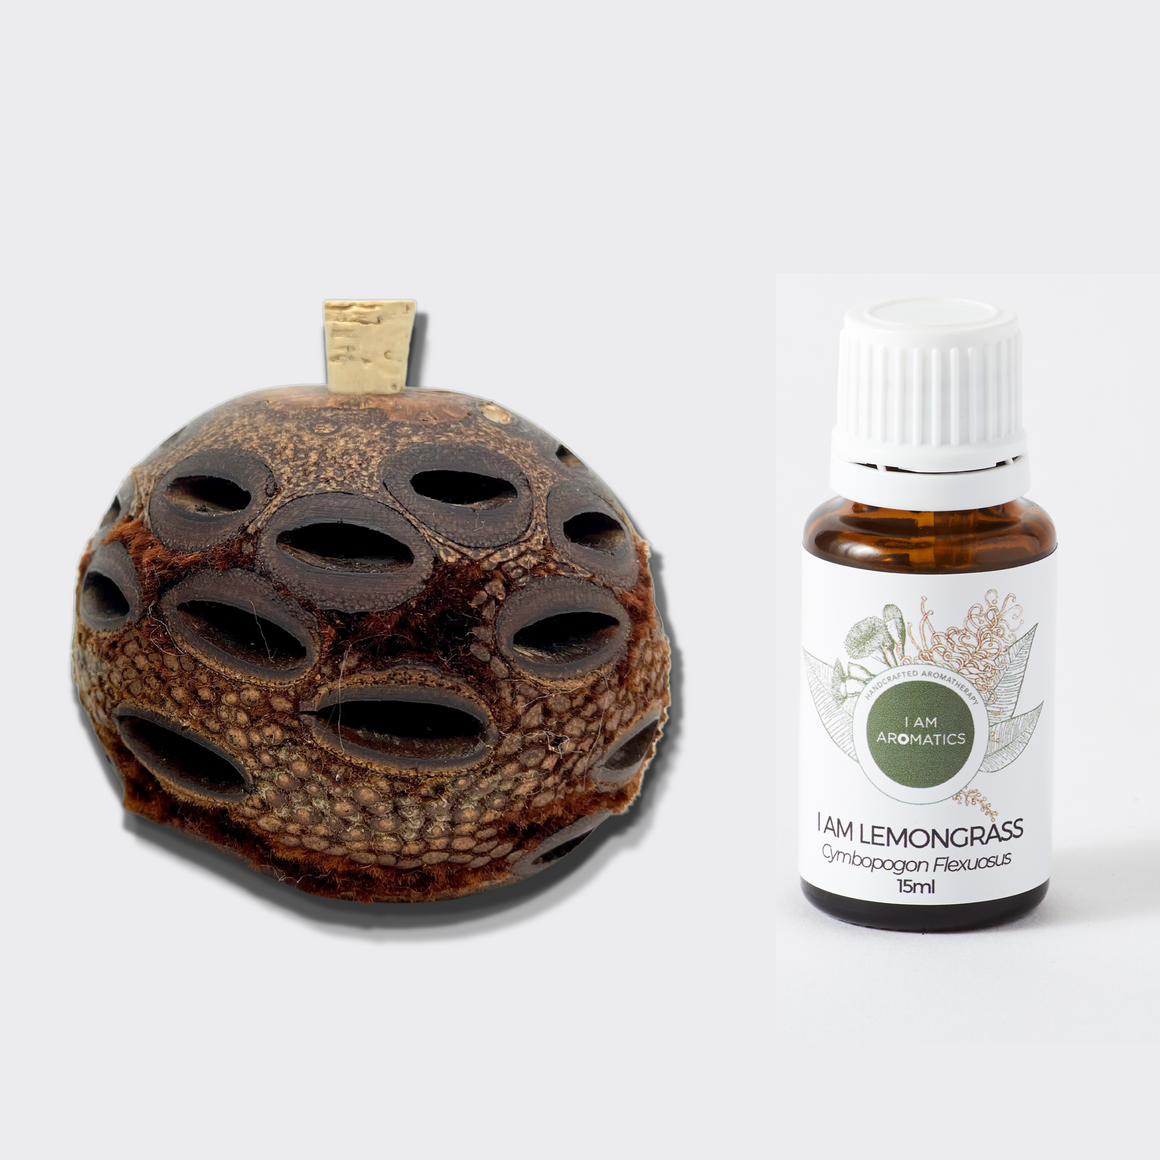 Aroma pod & lemongrass essential oil bundle